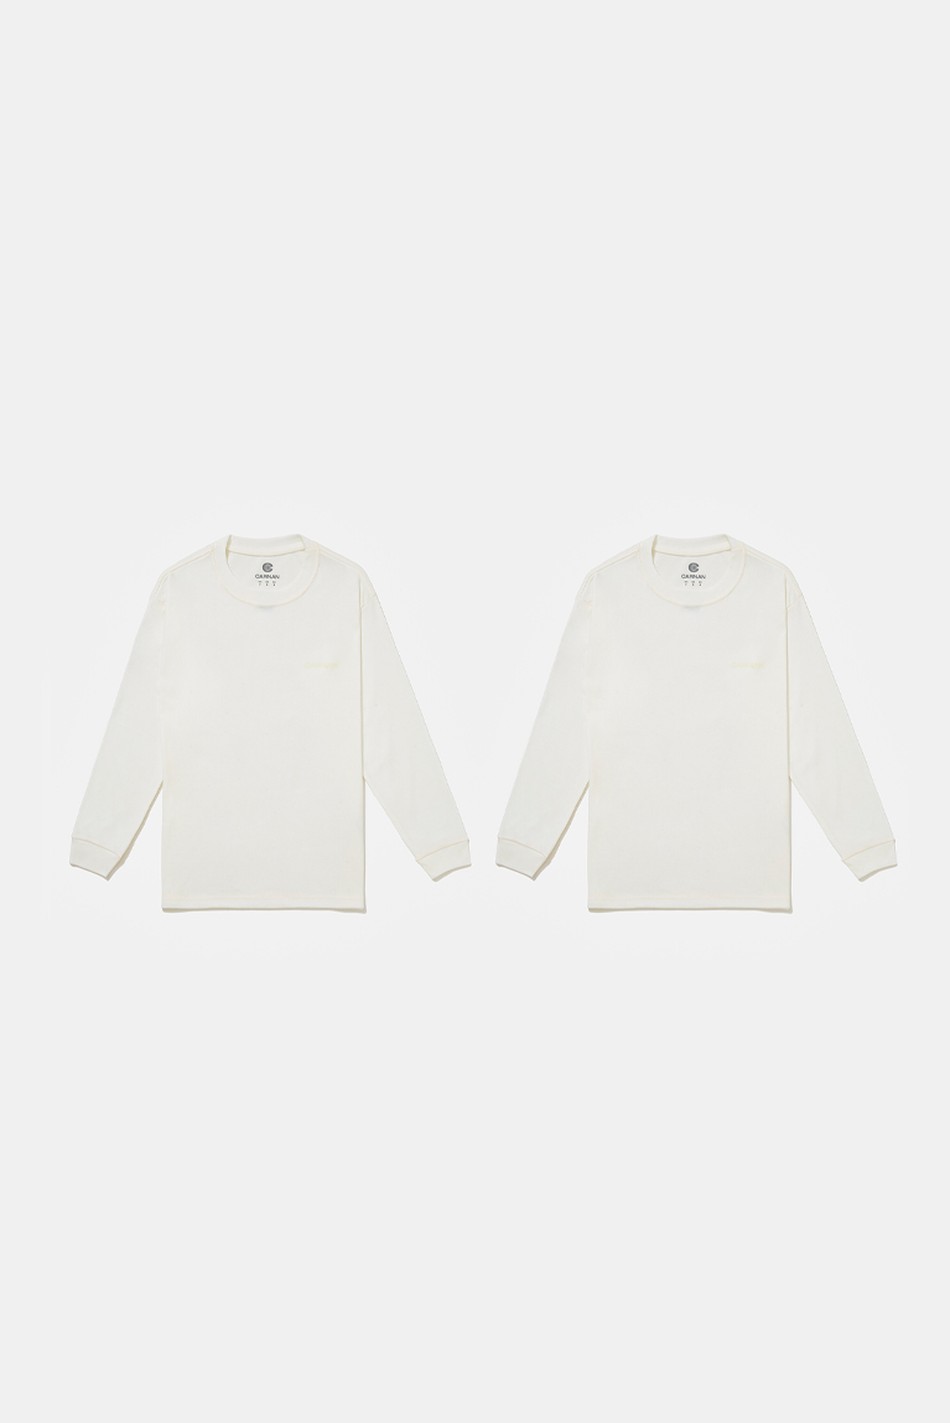 Basic Pack Long Sleeve Branco / Branco